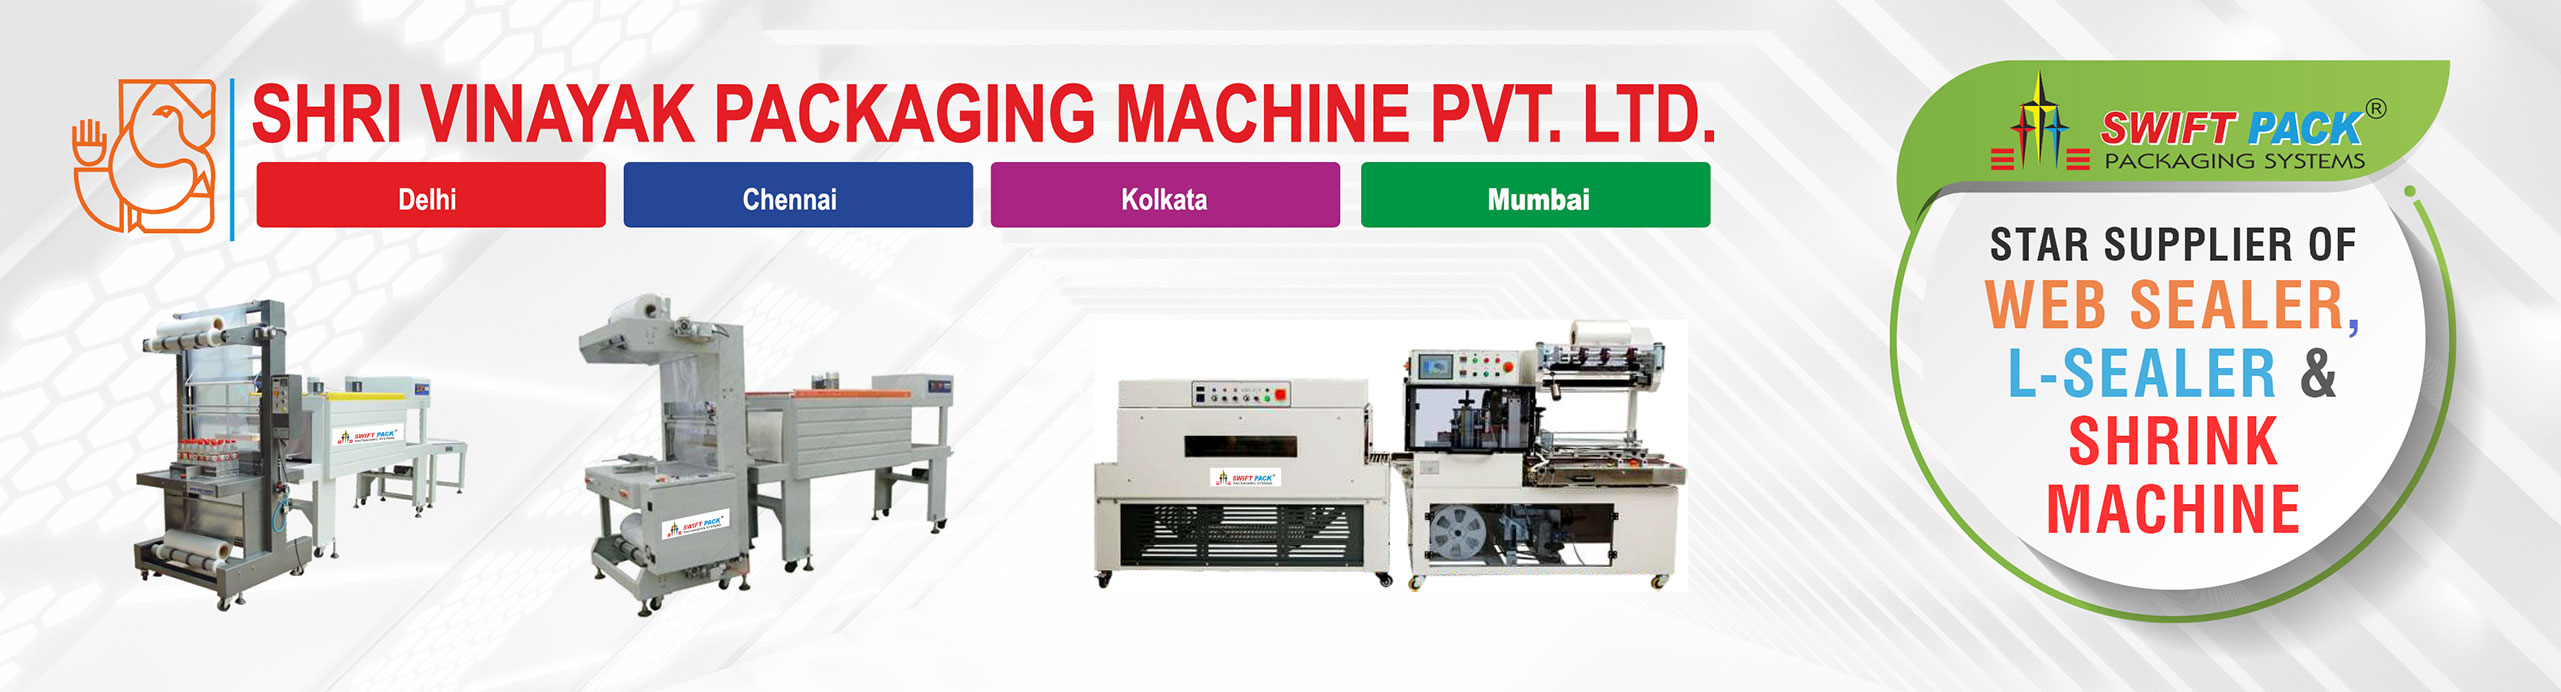 Shri Vinayak Packaging Machine Private Limited